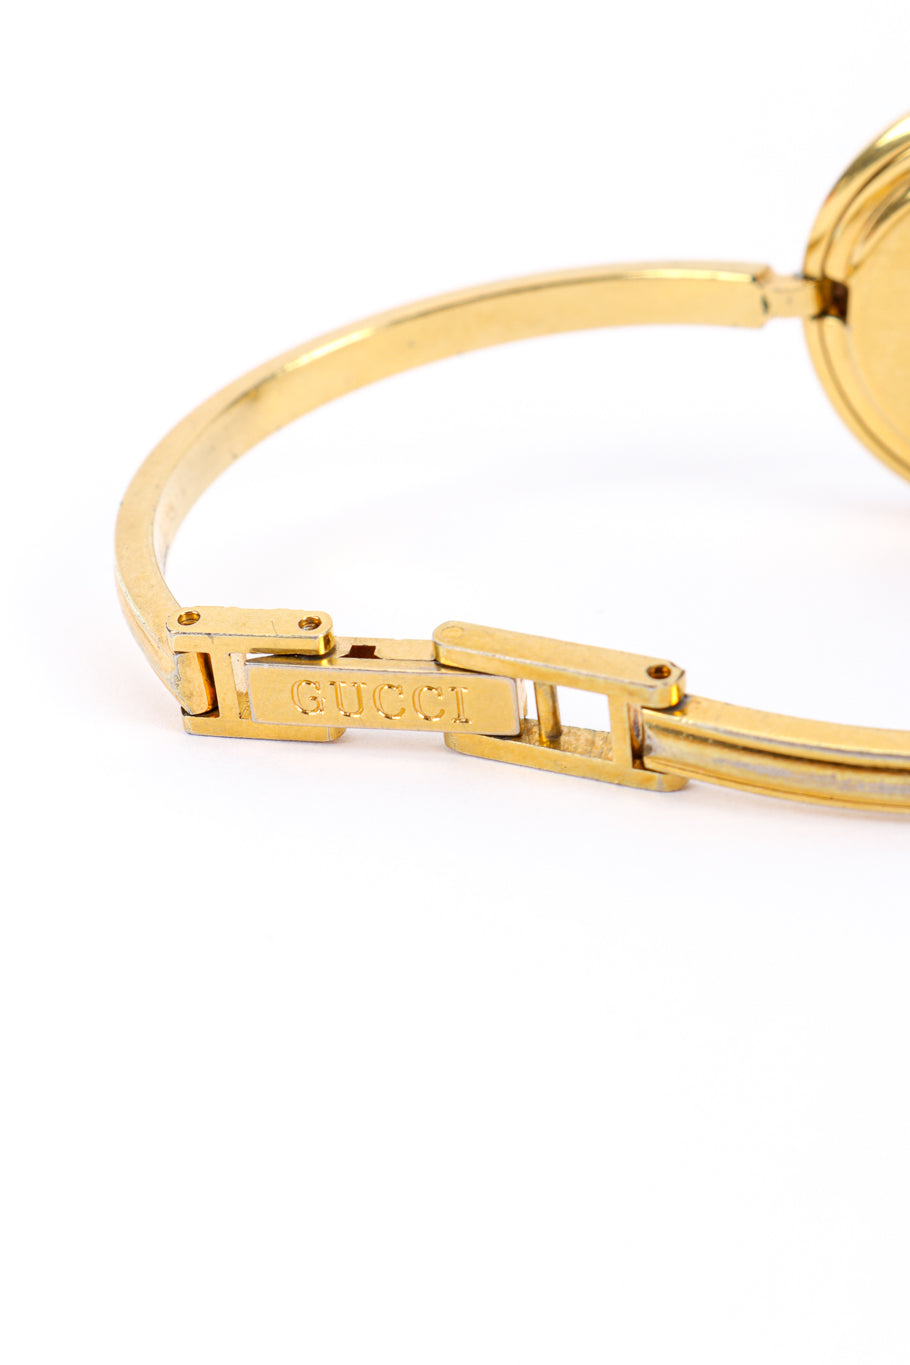 6 Bezel Bracelet Watch Boxed Set by Gucci signed clasp @recessla